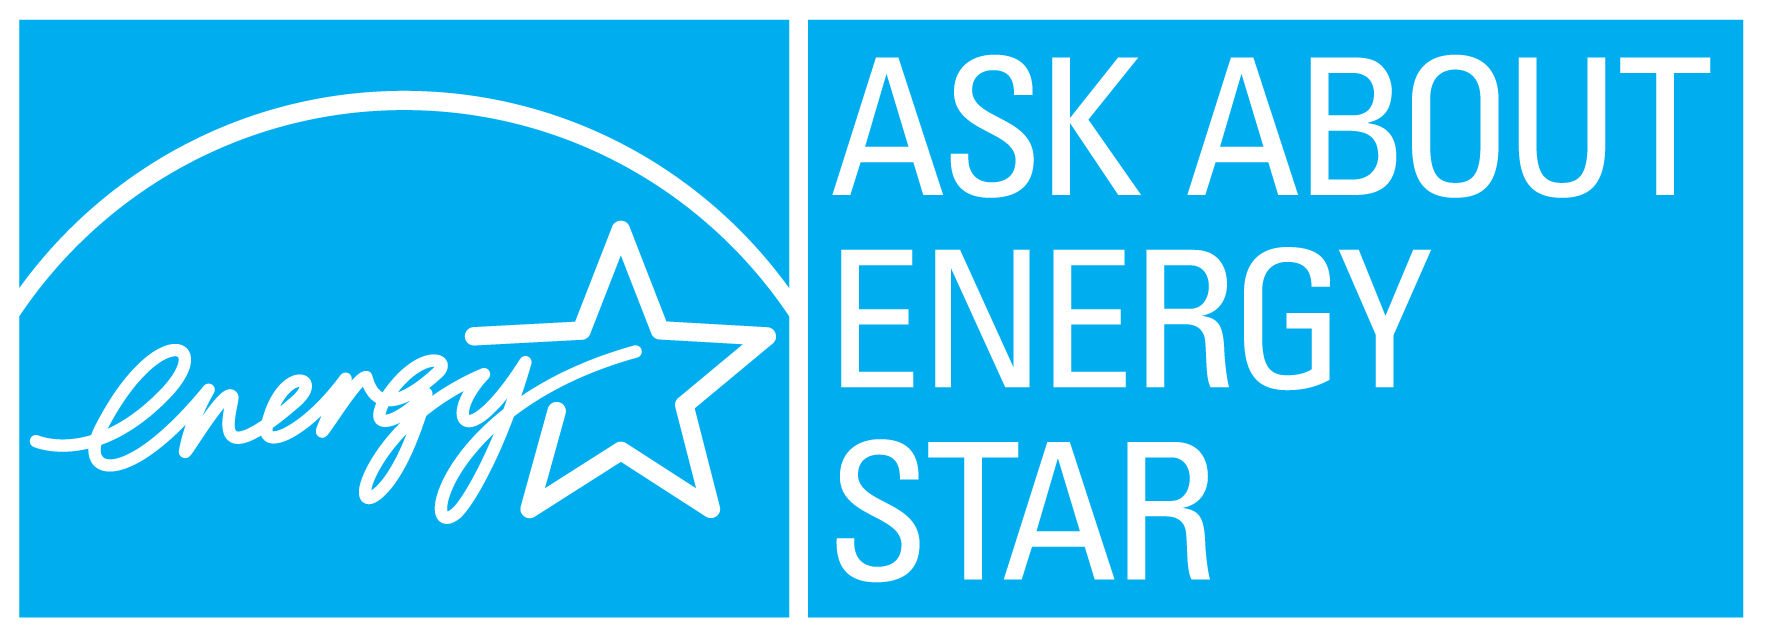 U.S. EPA, ENERGY STAR Homes